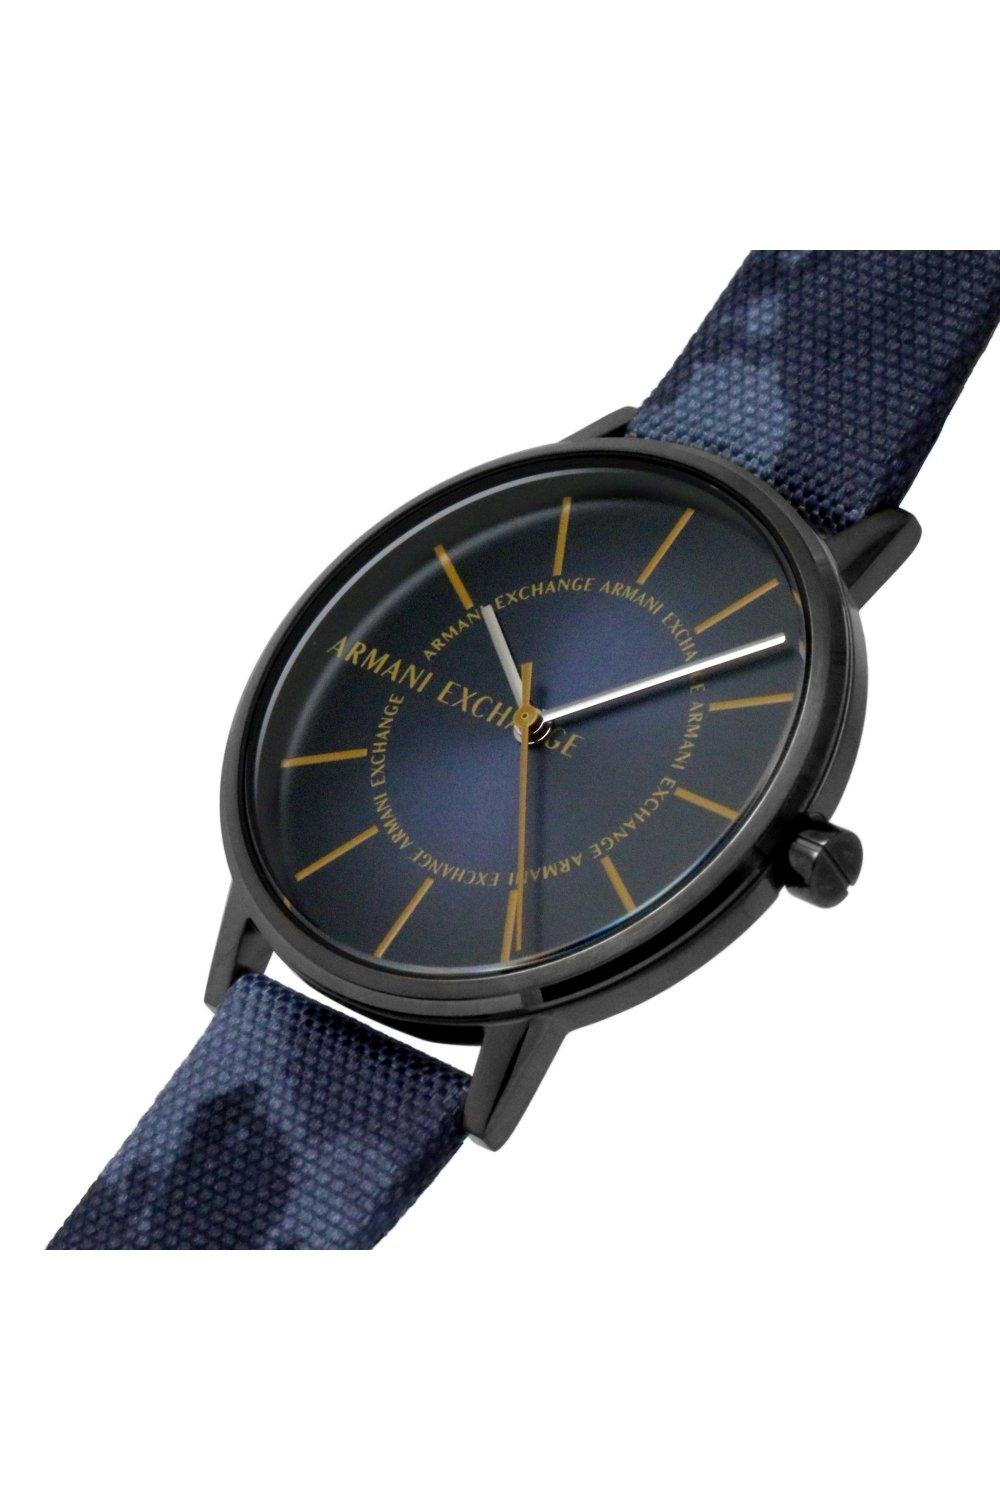 Watches | Stainless Steel Fashion Ax2750 | Exchange - Analogue Watch Armani Quartz